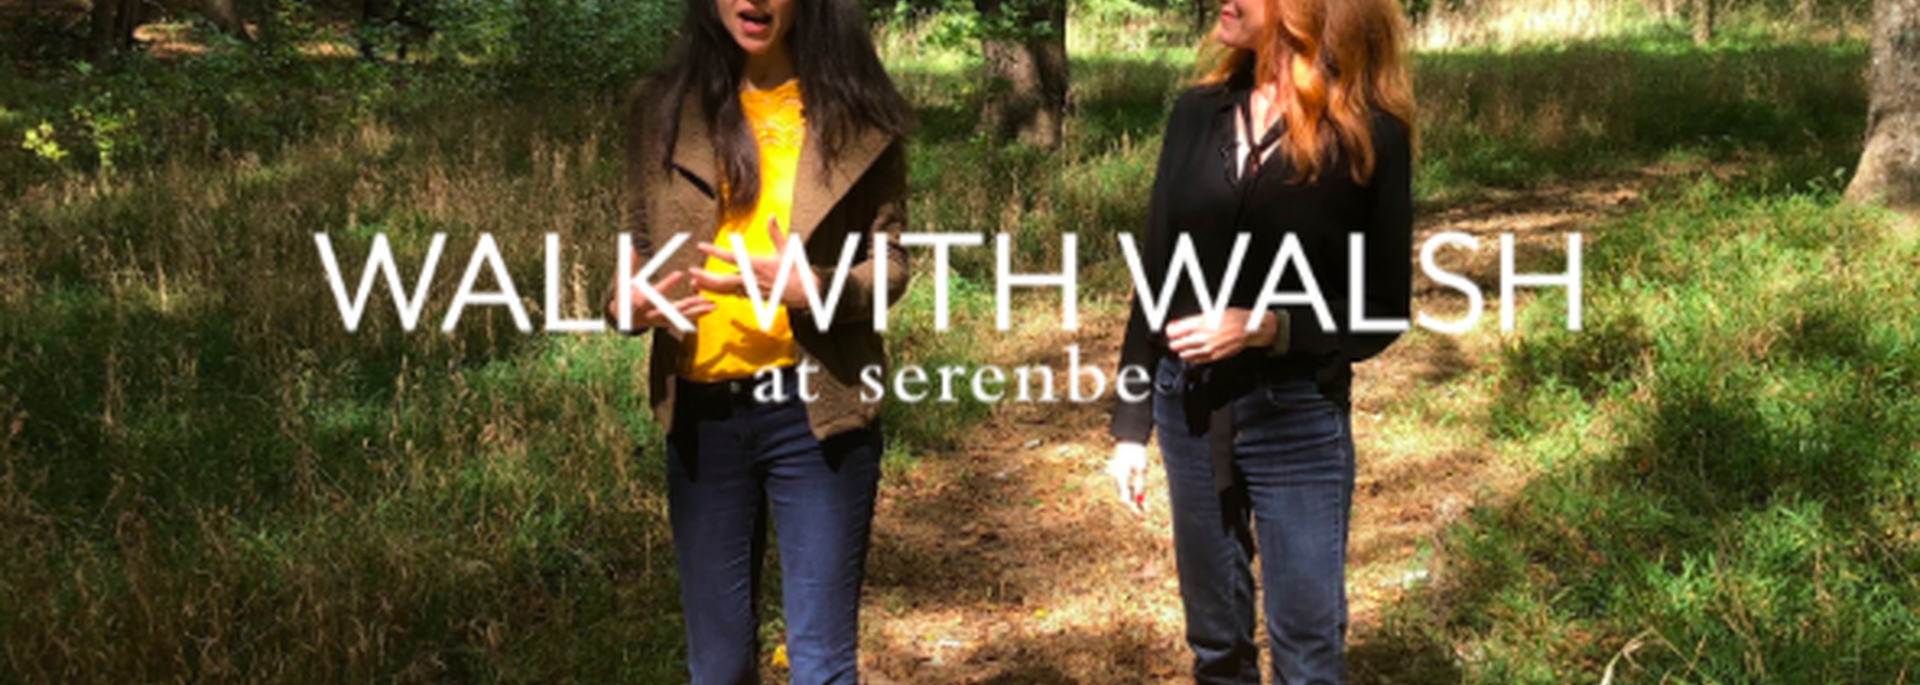 Walks With Walsh at Serenbe